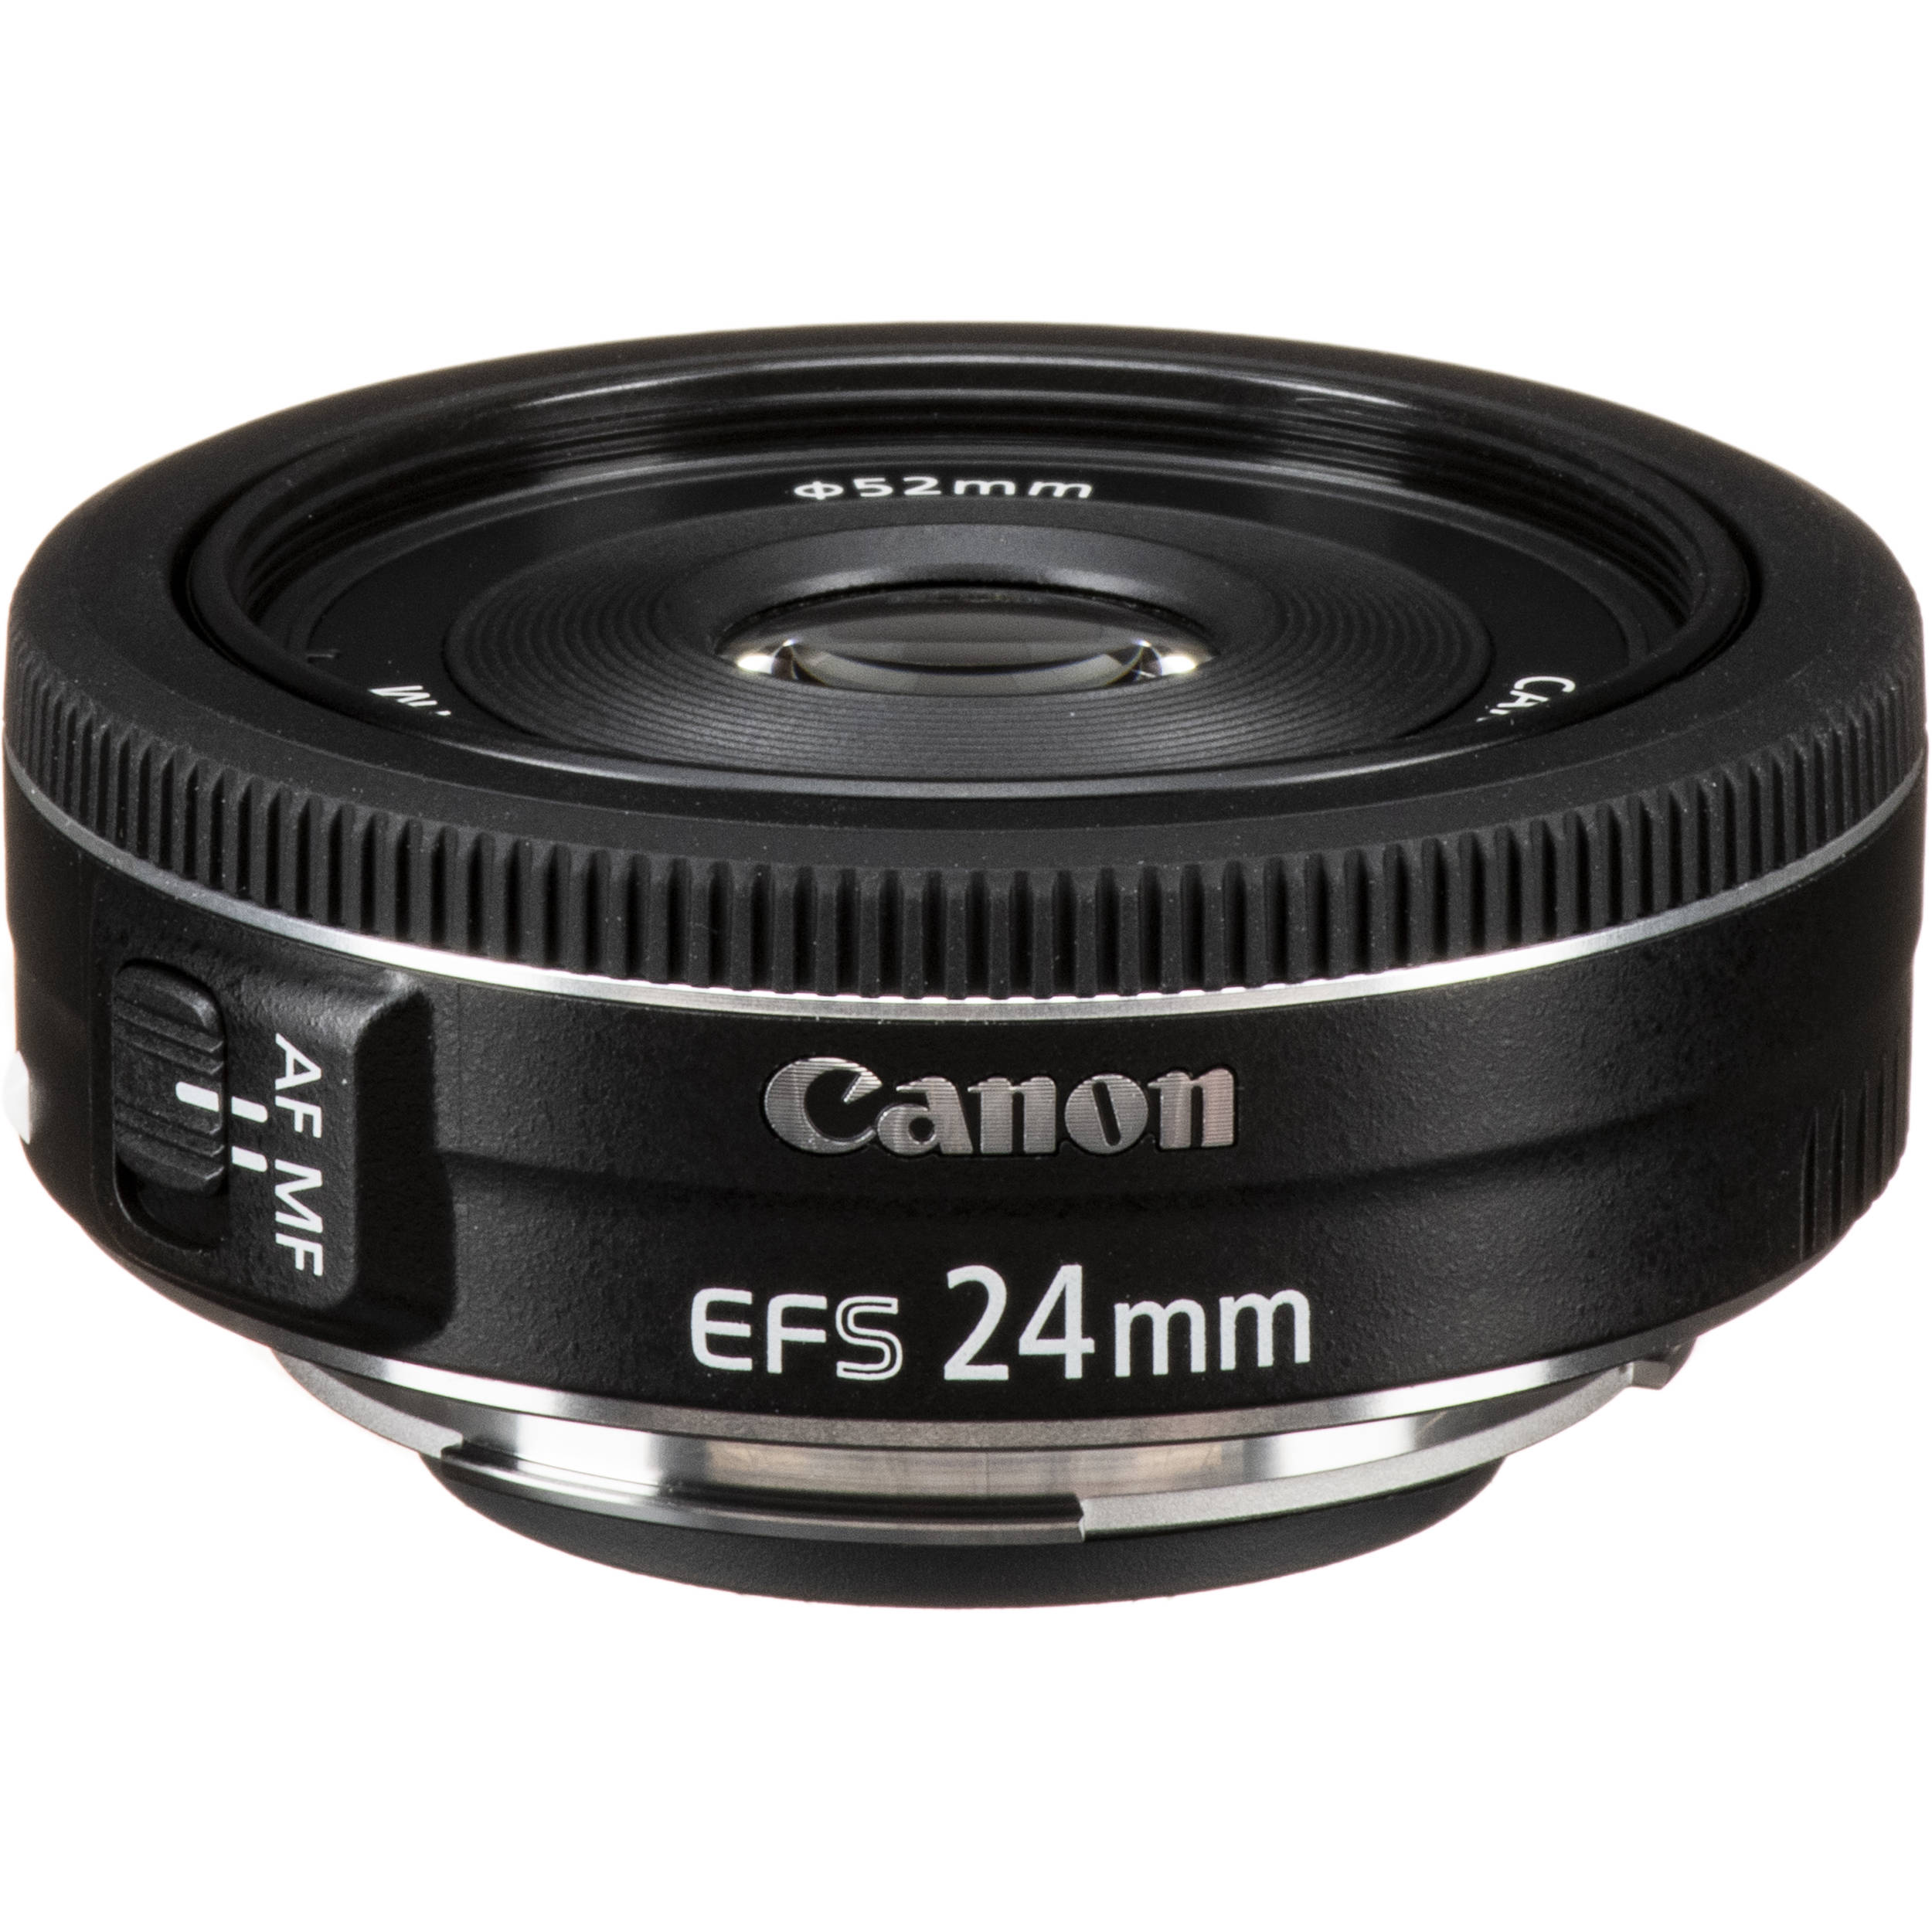 EF 24mm f/2.8